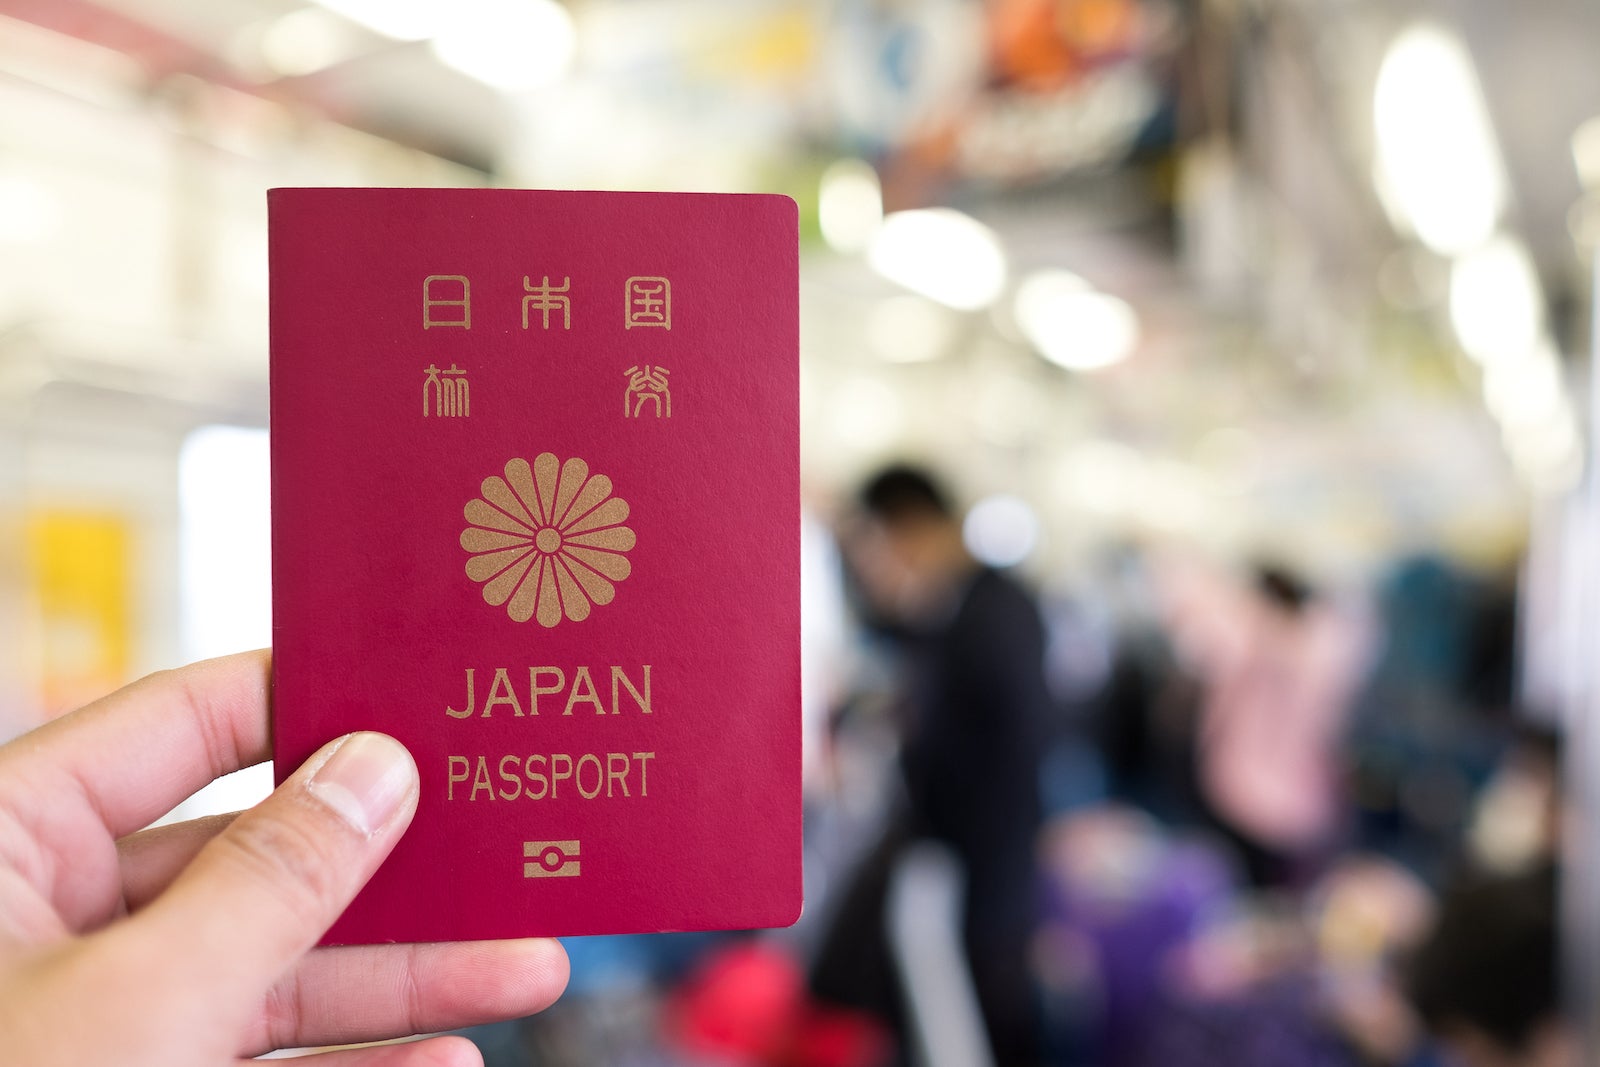 Japan passport, Travel concept